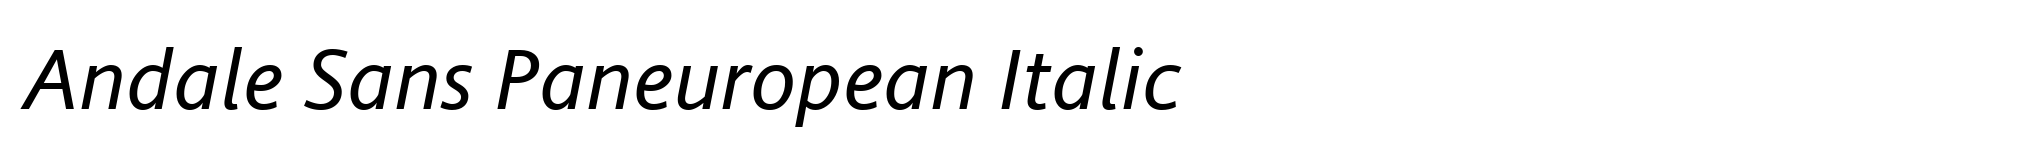 Andale Sans Paneuropean Italic image